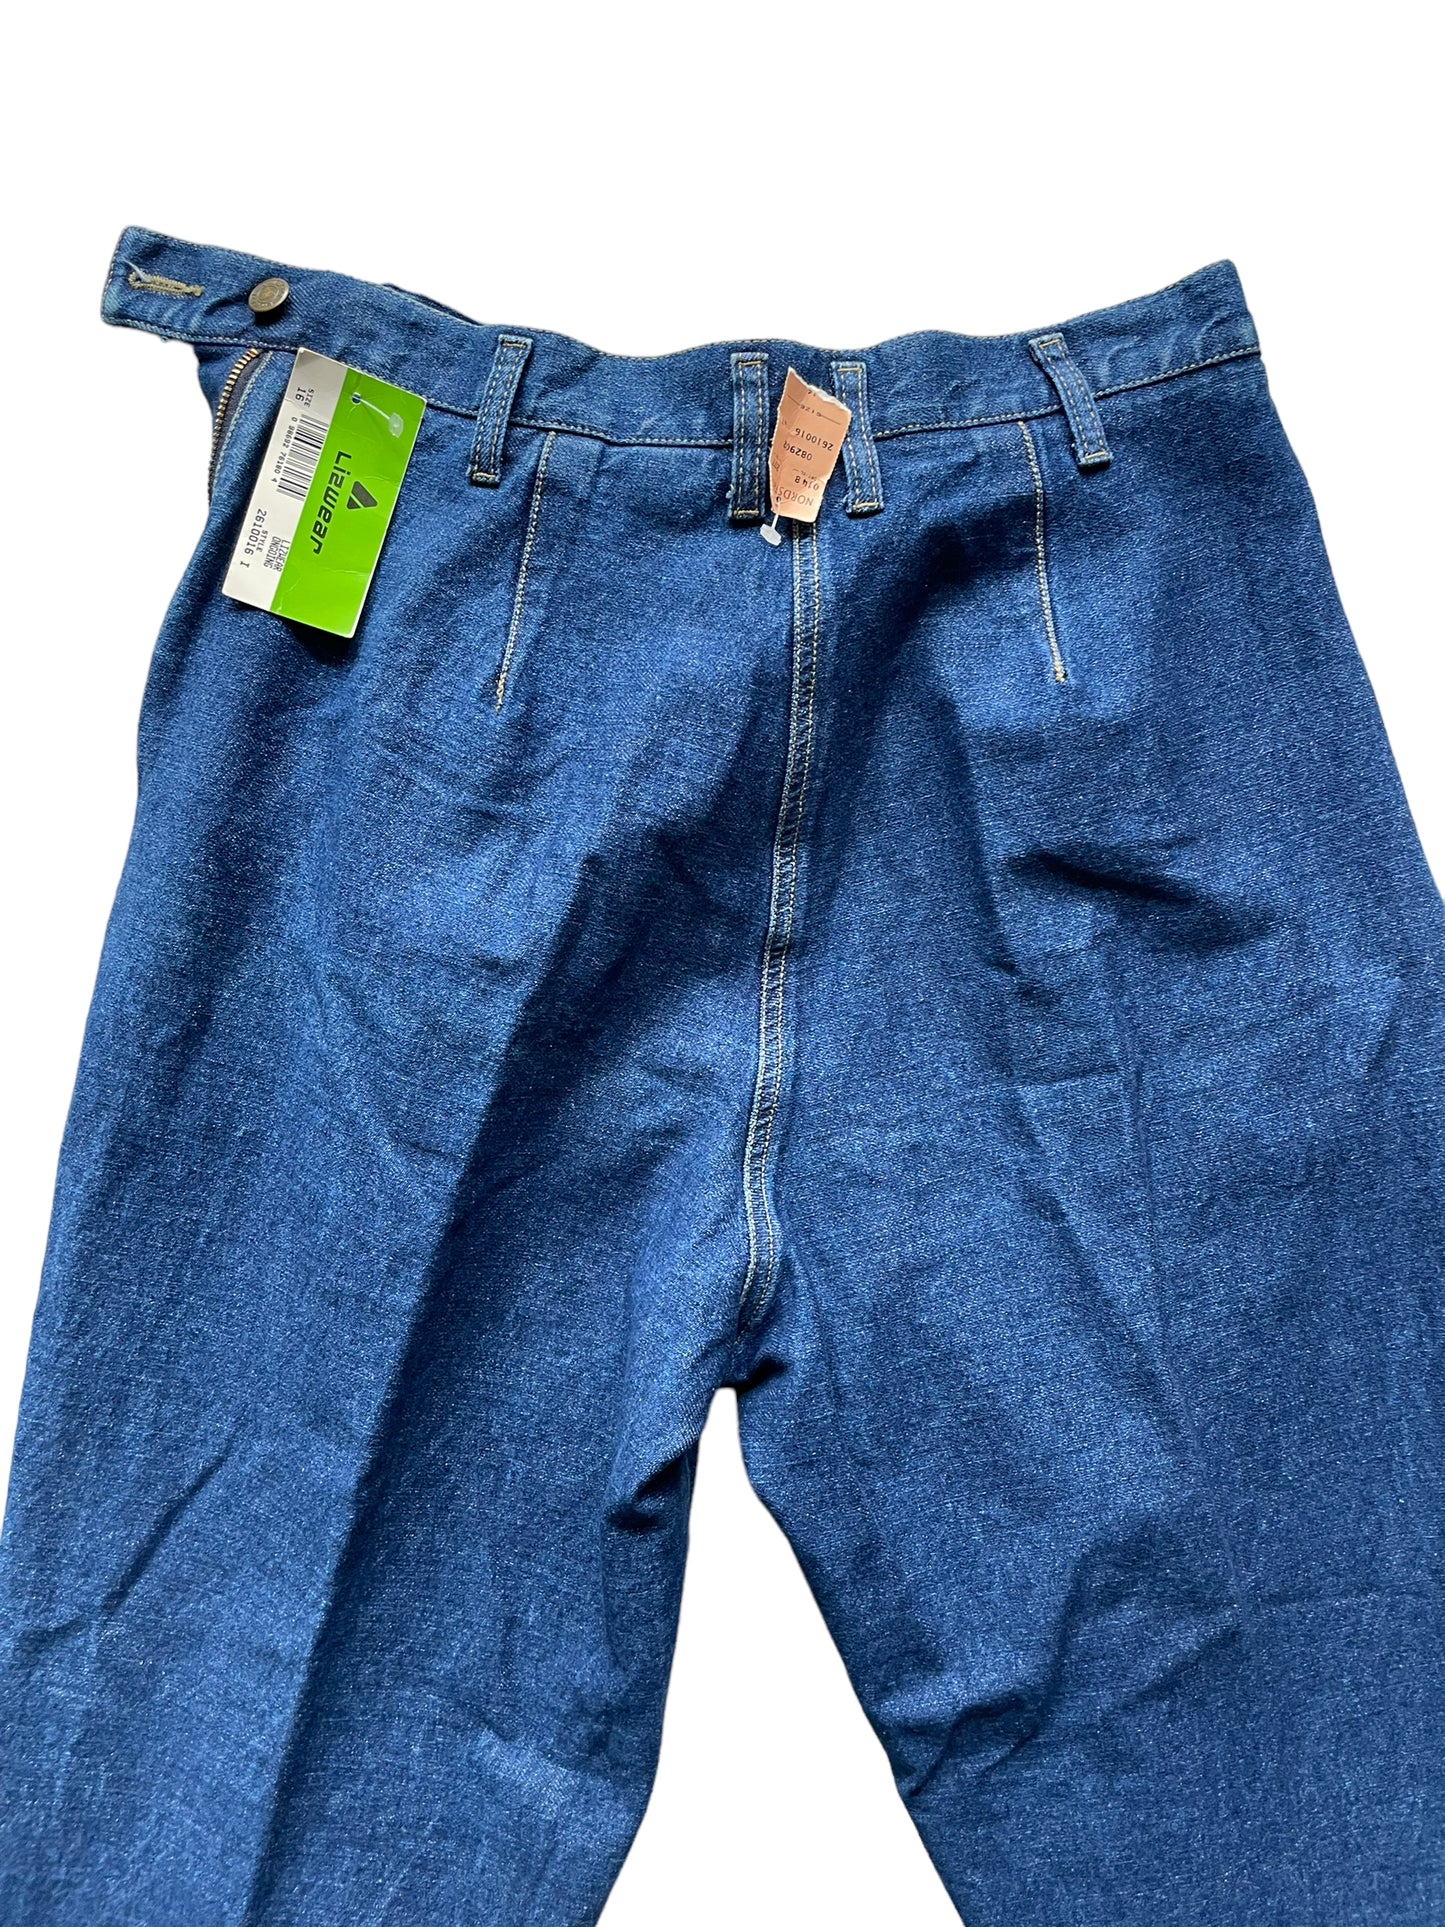 Back view of Vintage Deadstock 80's Liz Claiborne Side Zip Stir Up Jeans